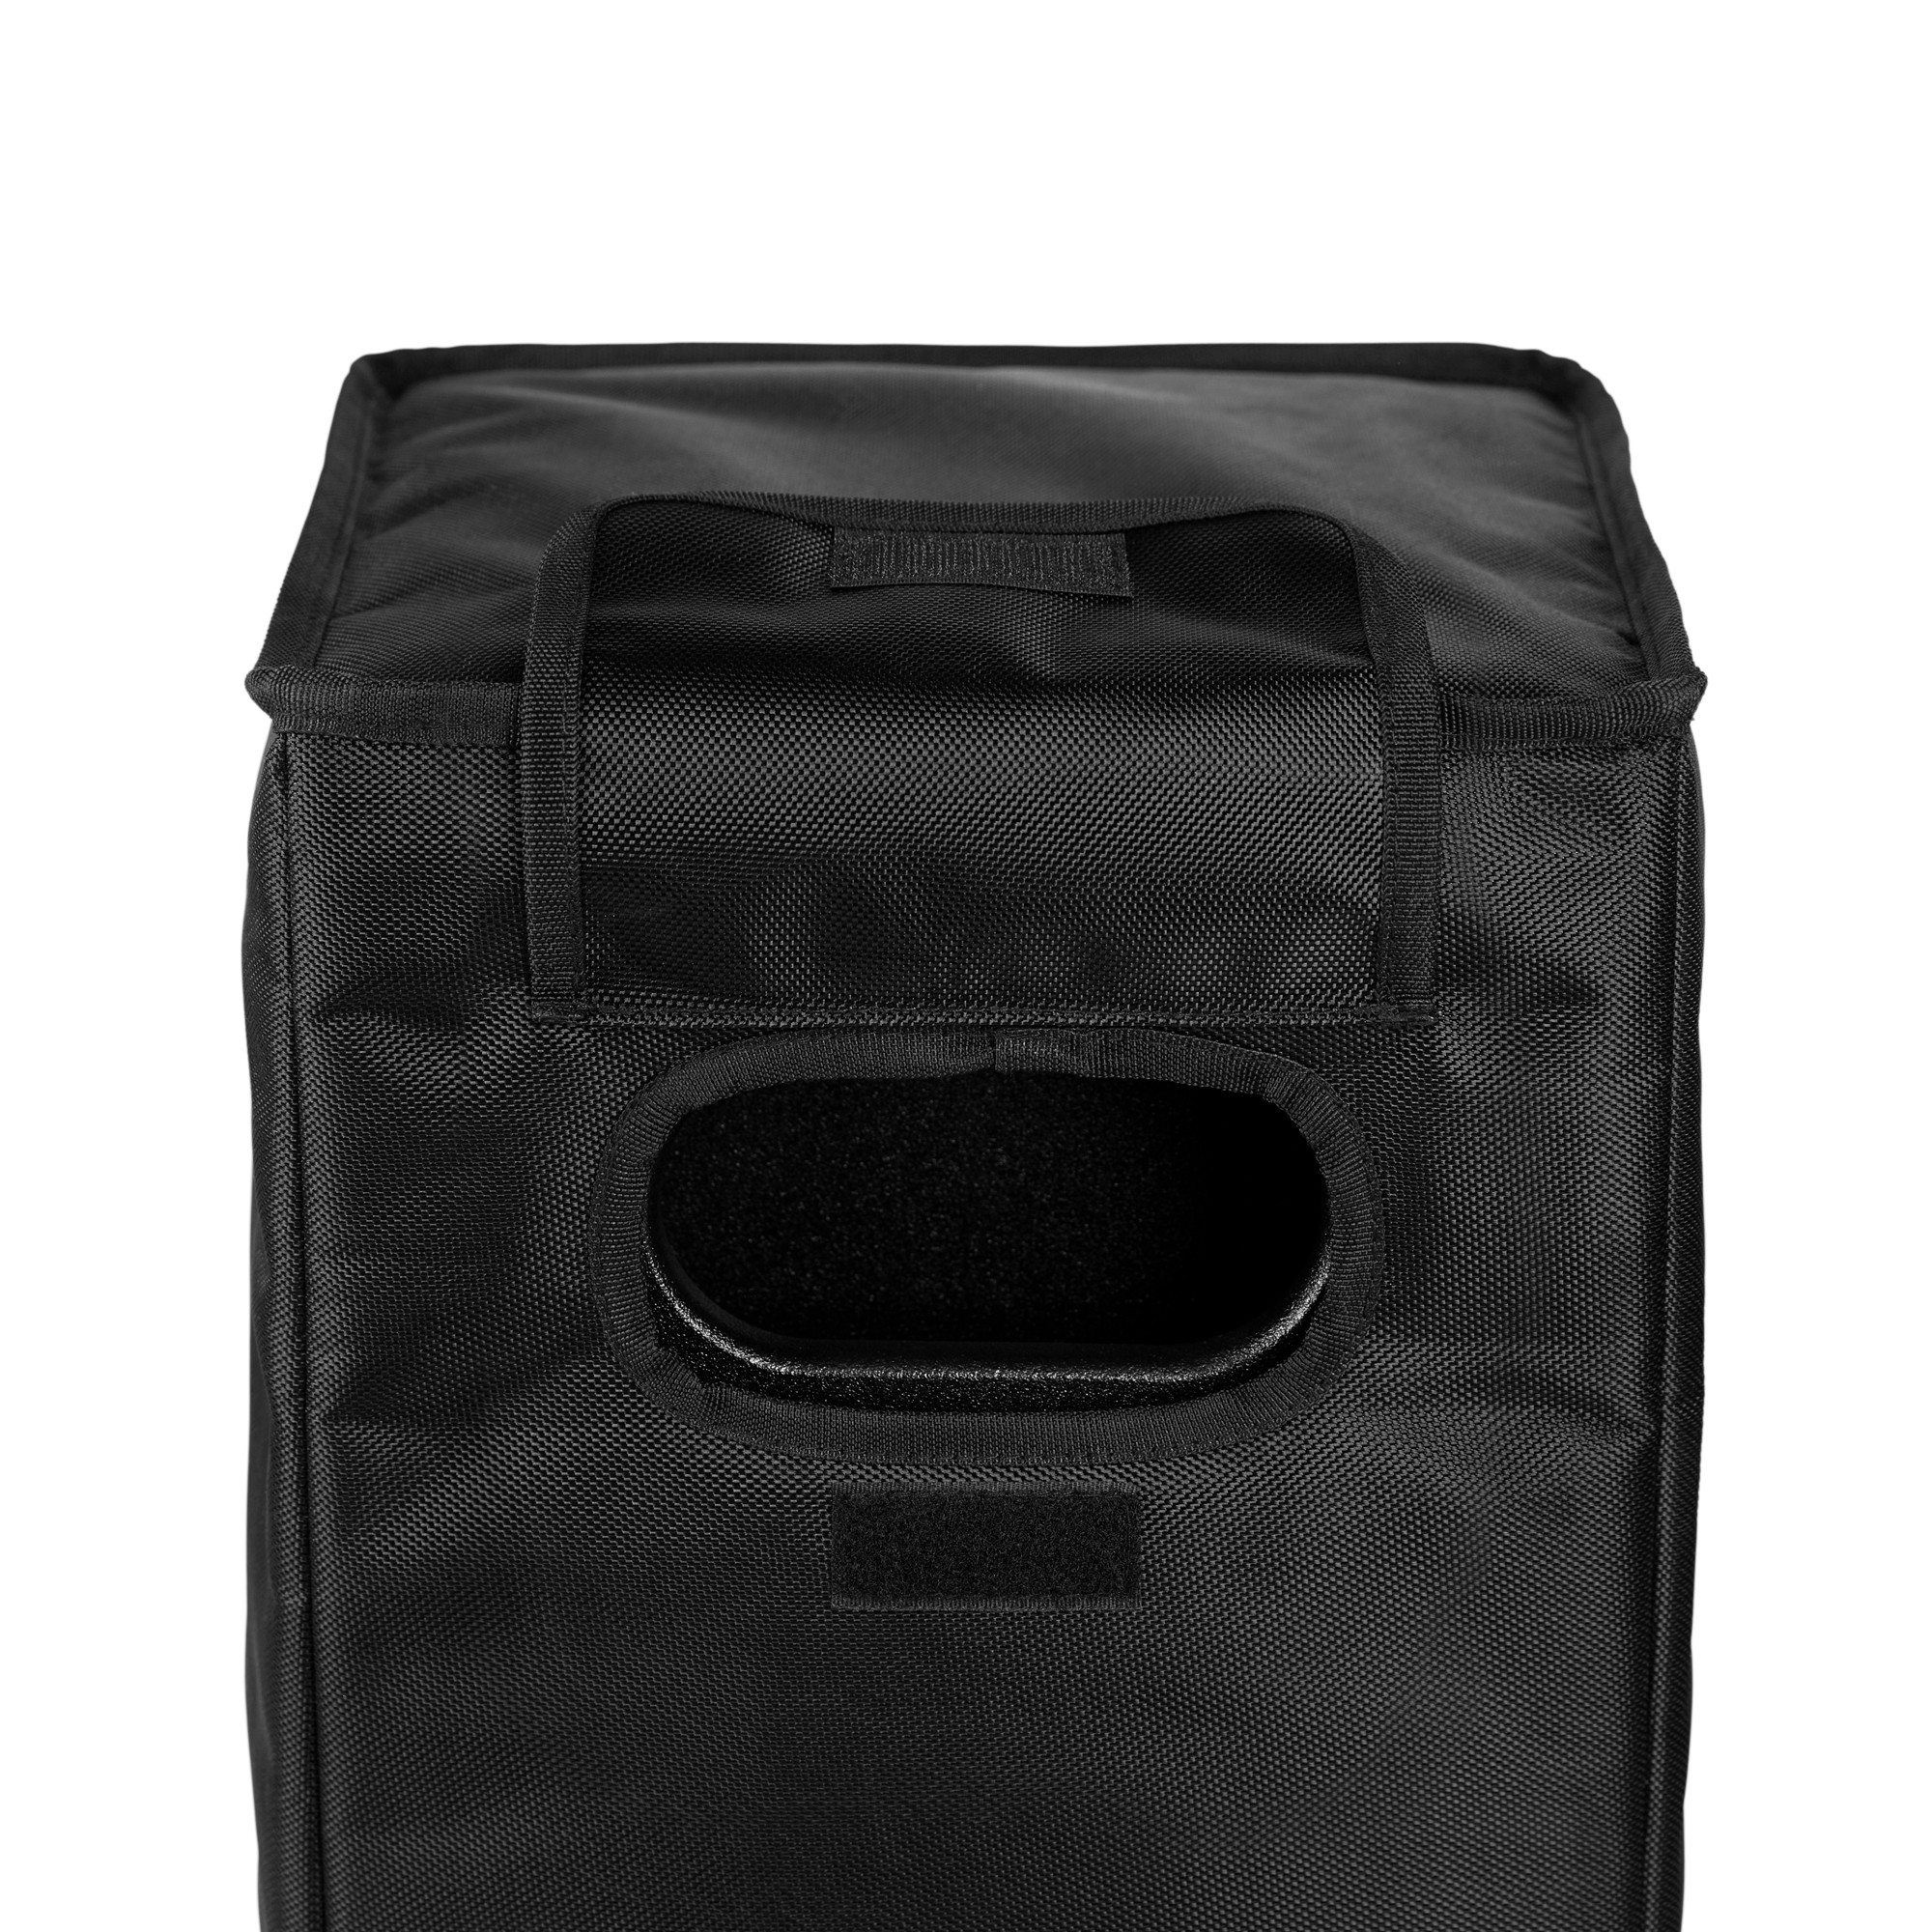 Ld Systems Dave 18 G4x Sat Pc - Bag for speakers & subwoofer - Variation 3